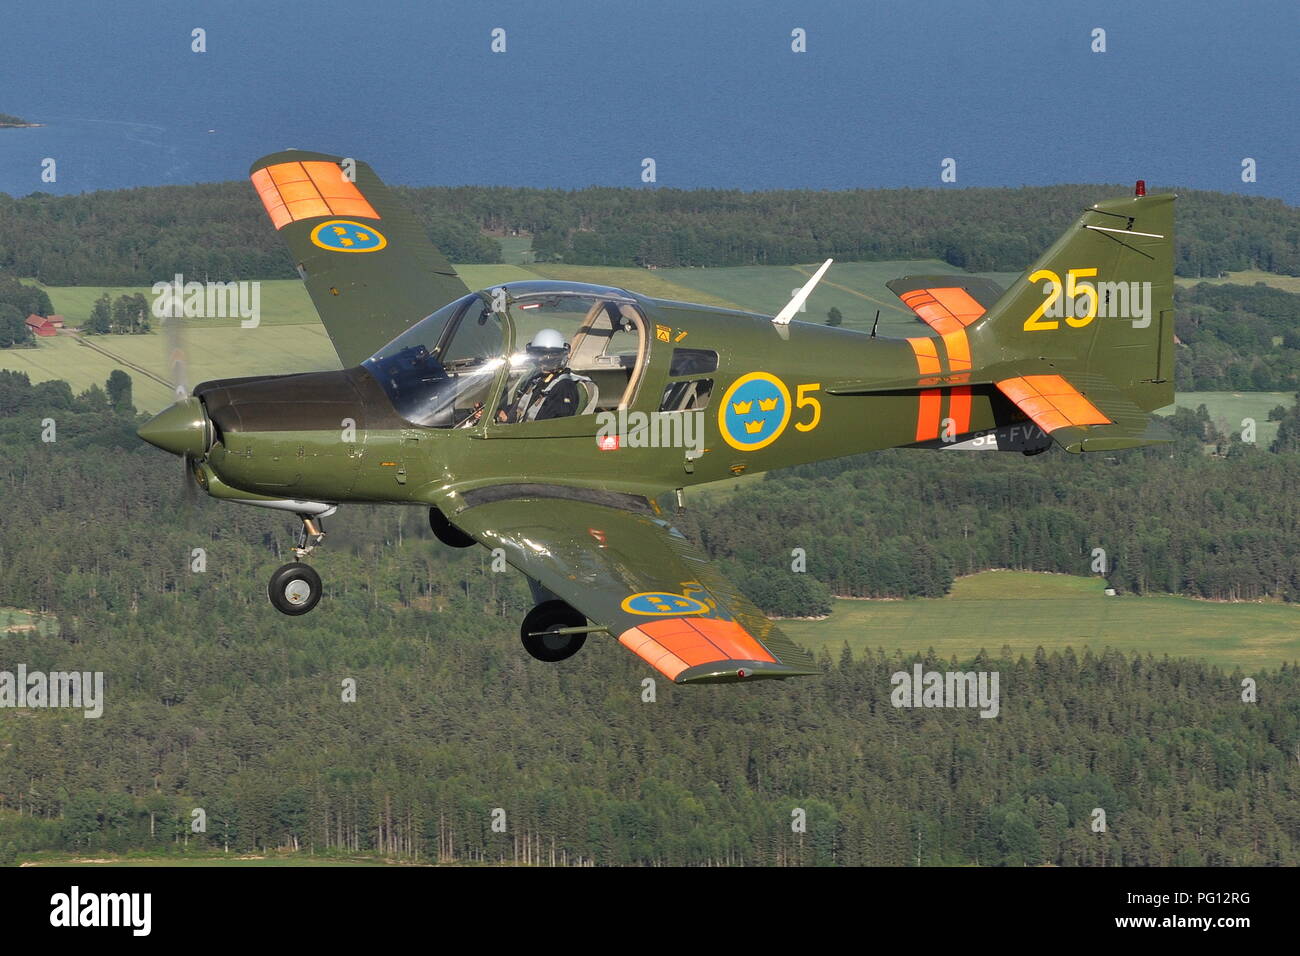 SCOTTISH AVIATION SK-61 BULLDOG OF THE SWEDISH AIR FORCE HISTORIC FLIGHT. Stock Photo